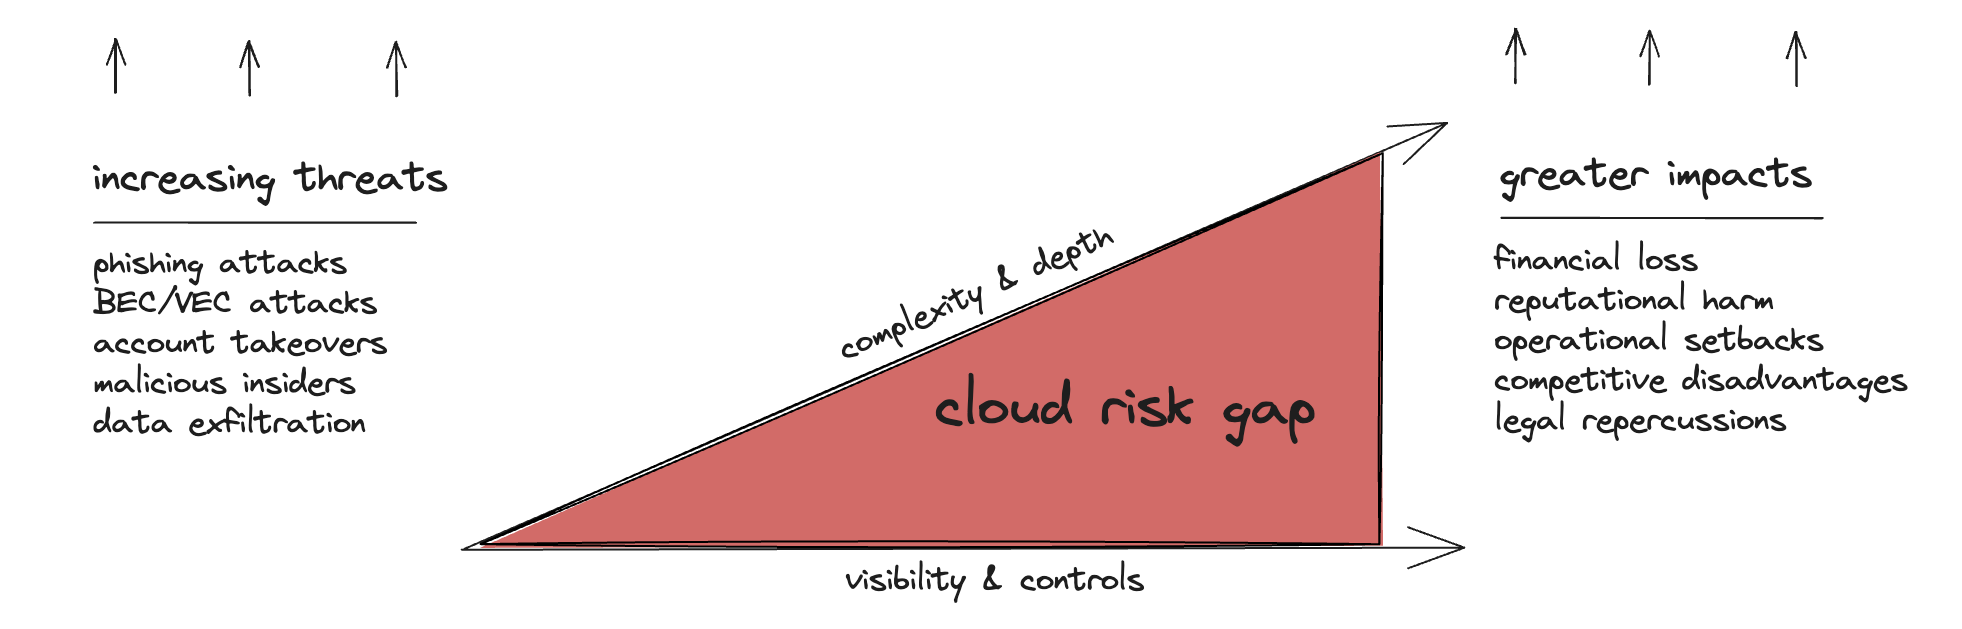 The Cloud Risk Gap